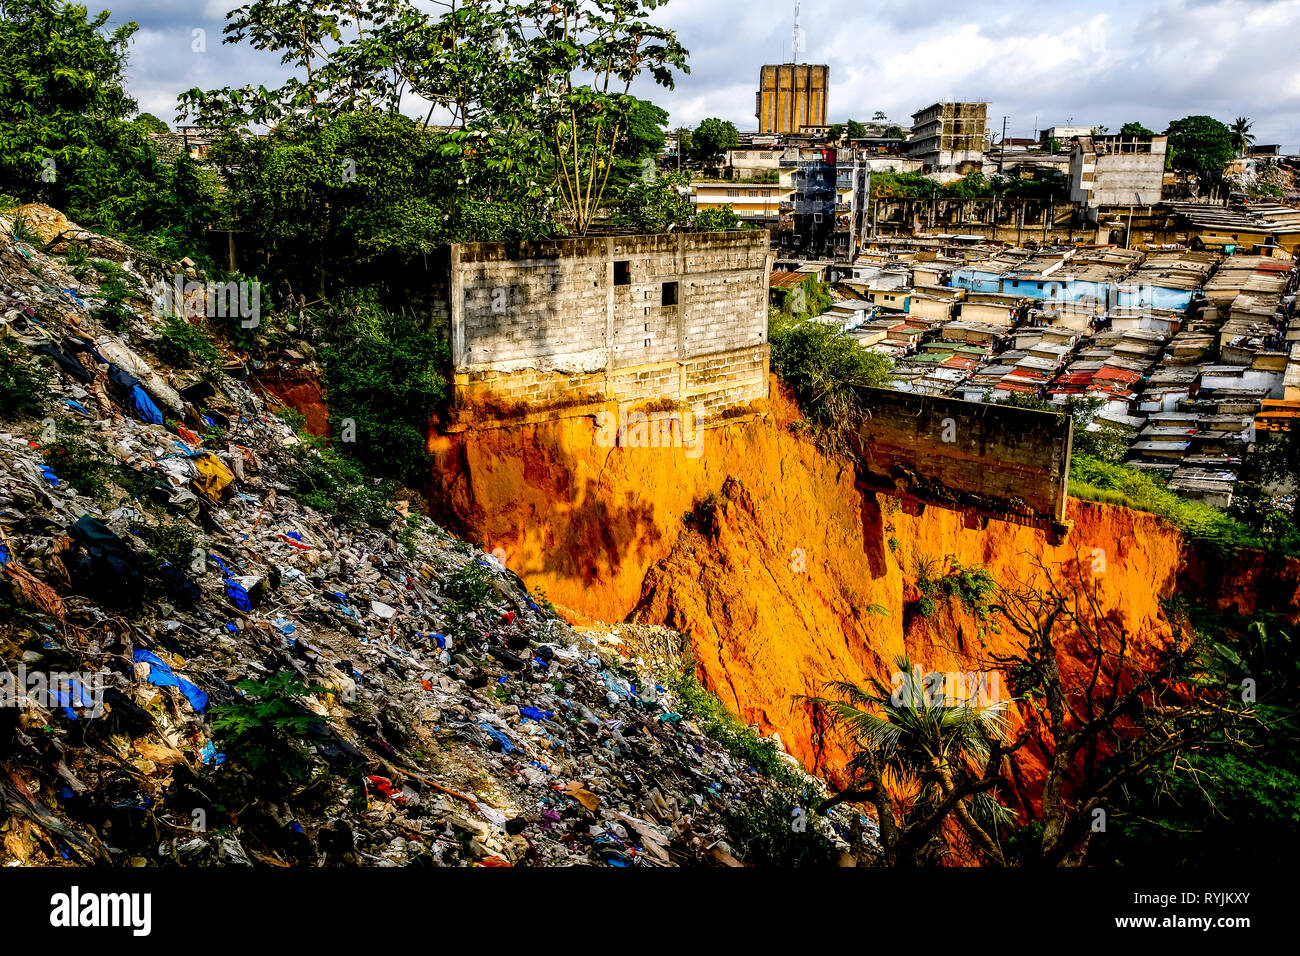 Waste and slums in Abidjan, Ivory Coast. Stock Photo